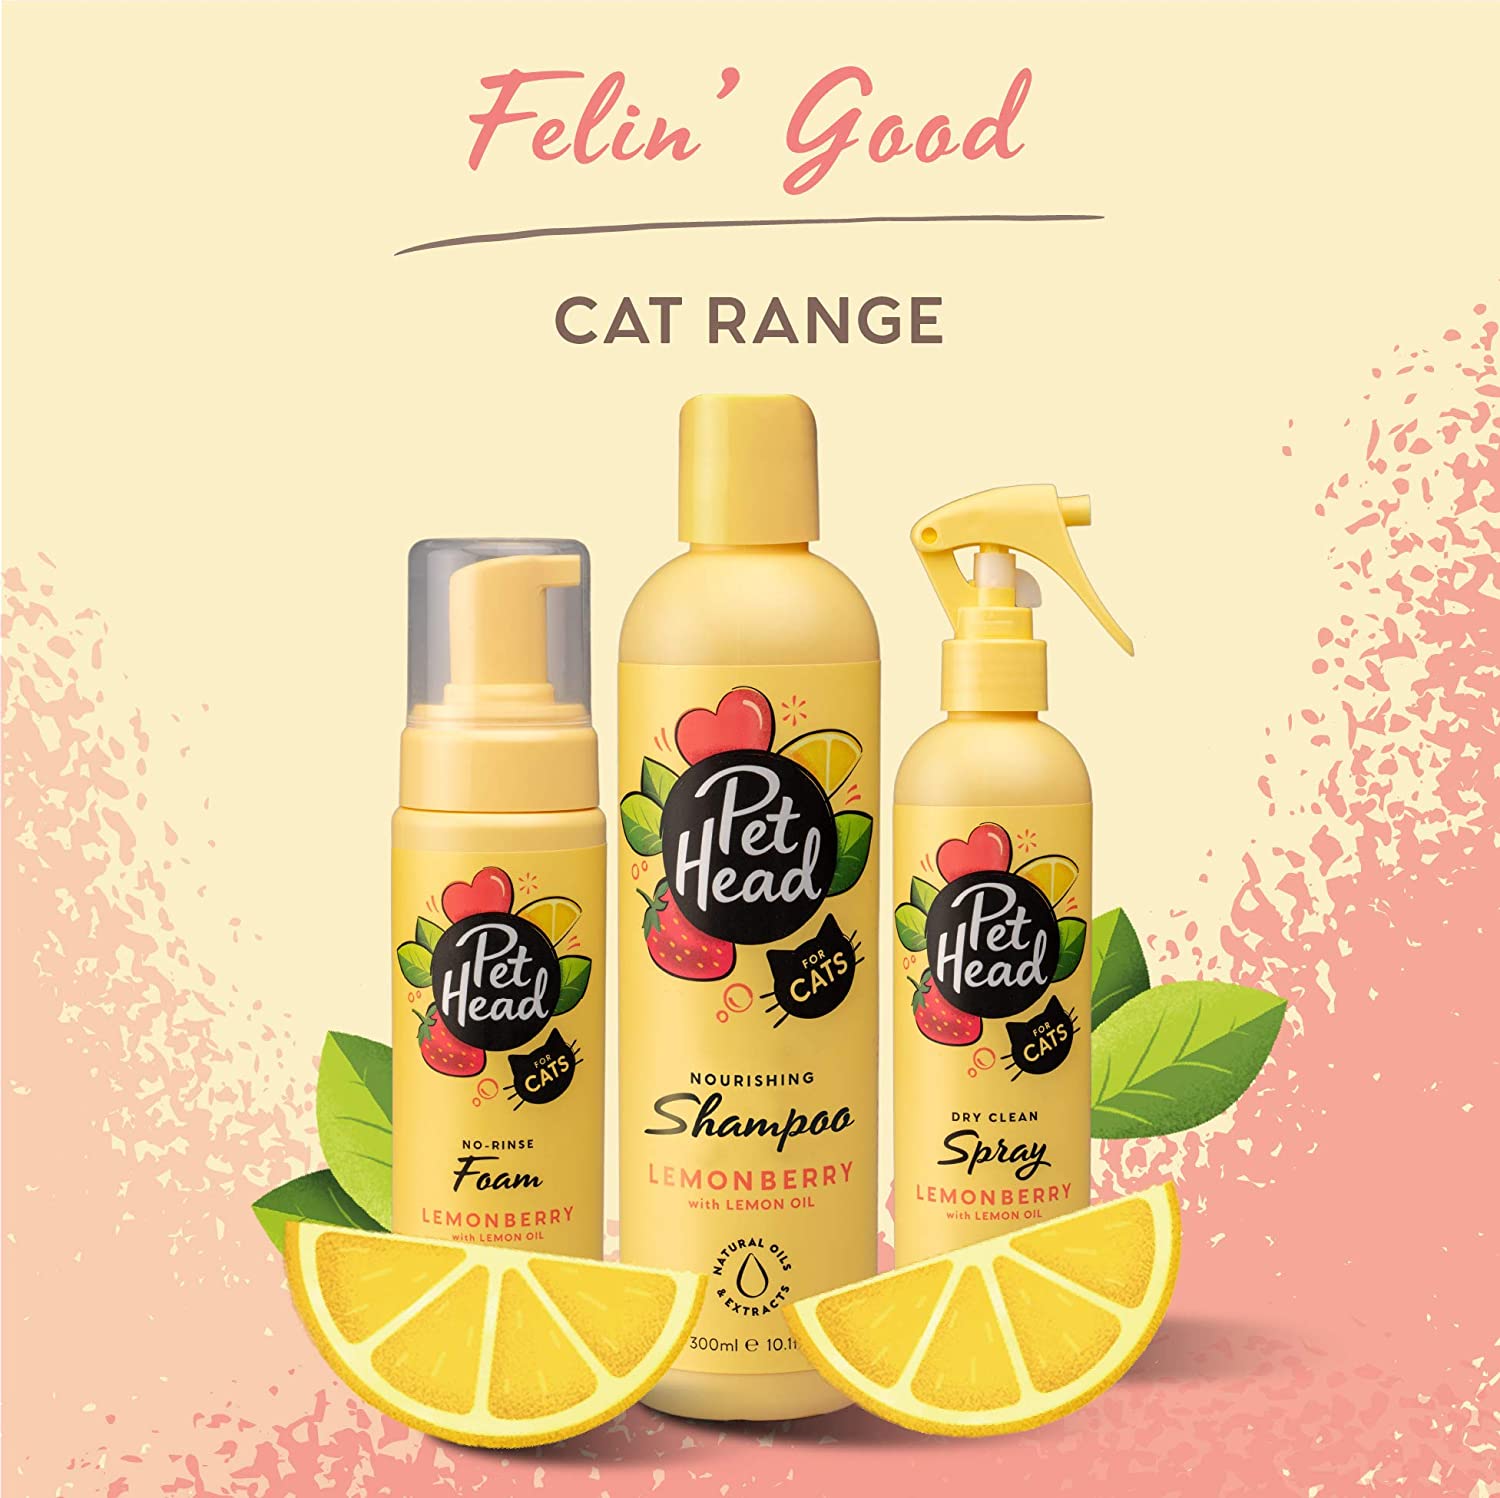 Pet Head Dry Clean Spray Lemonberry